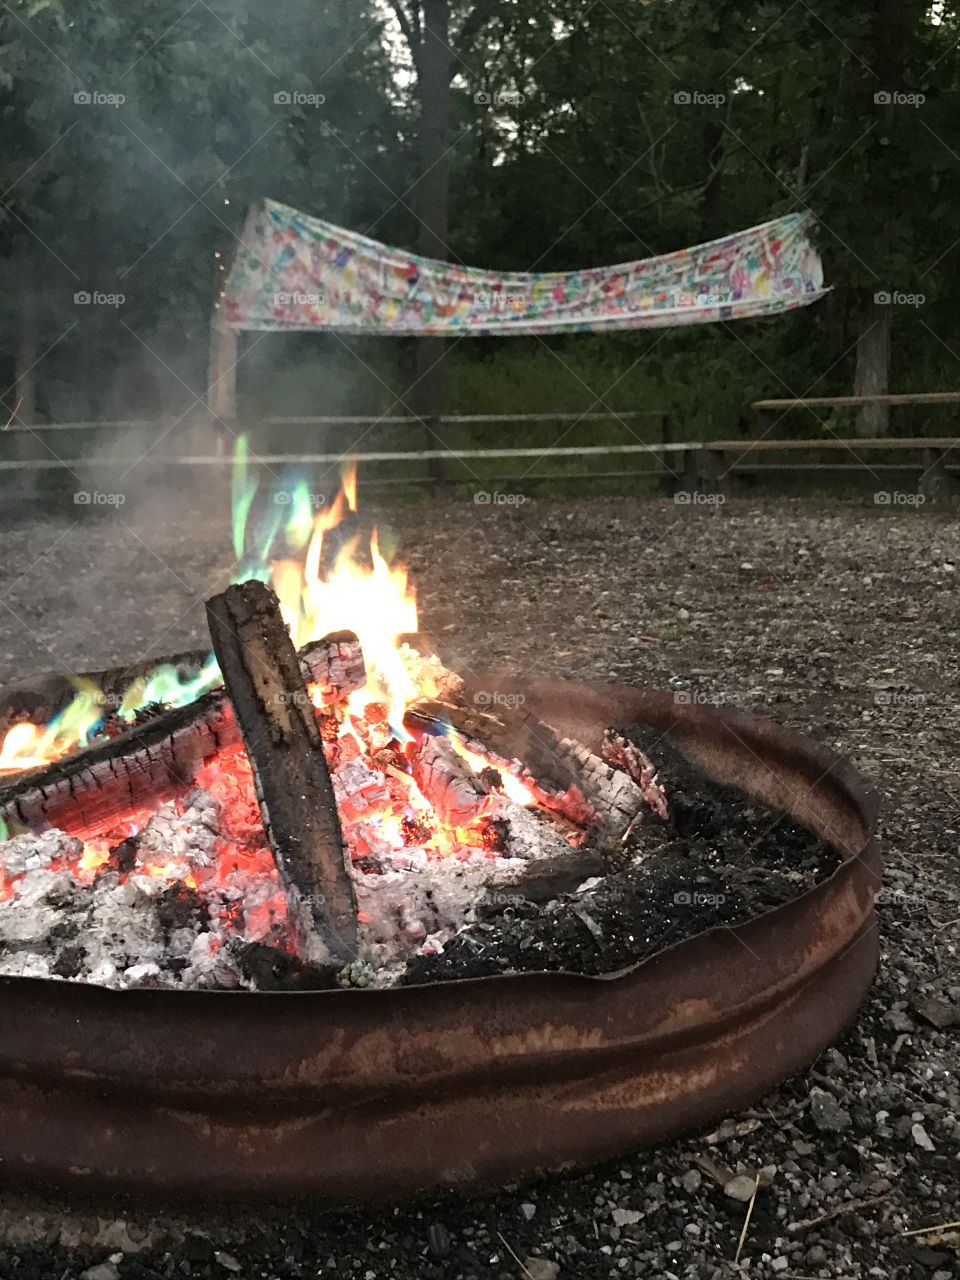 Campfires and smores 
